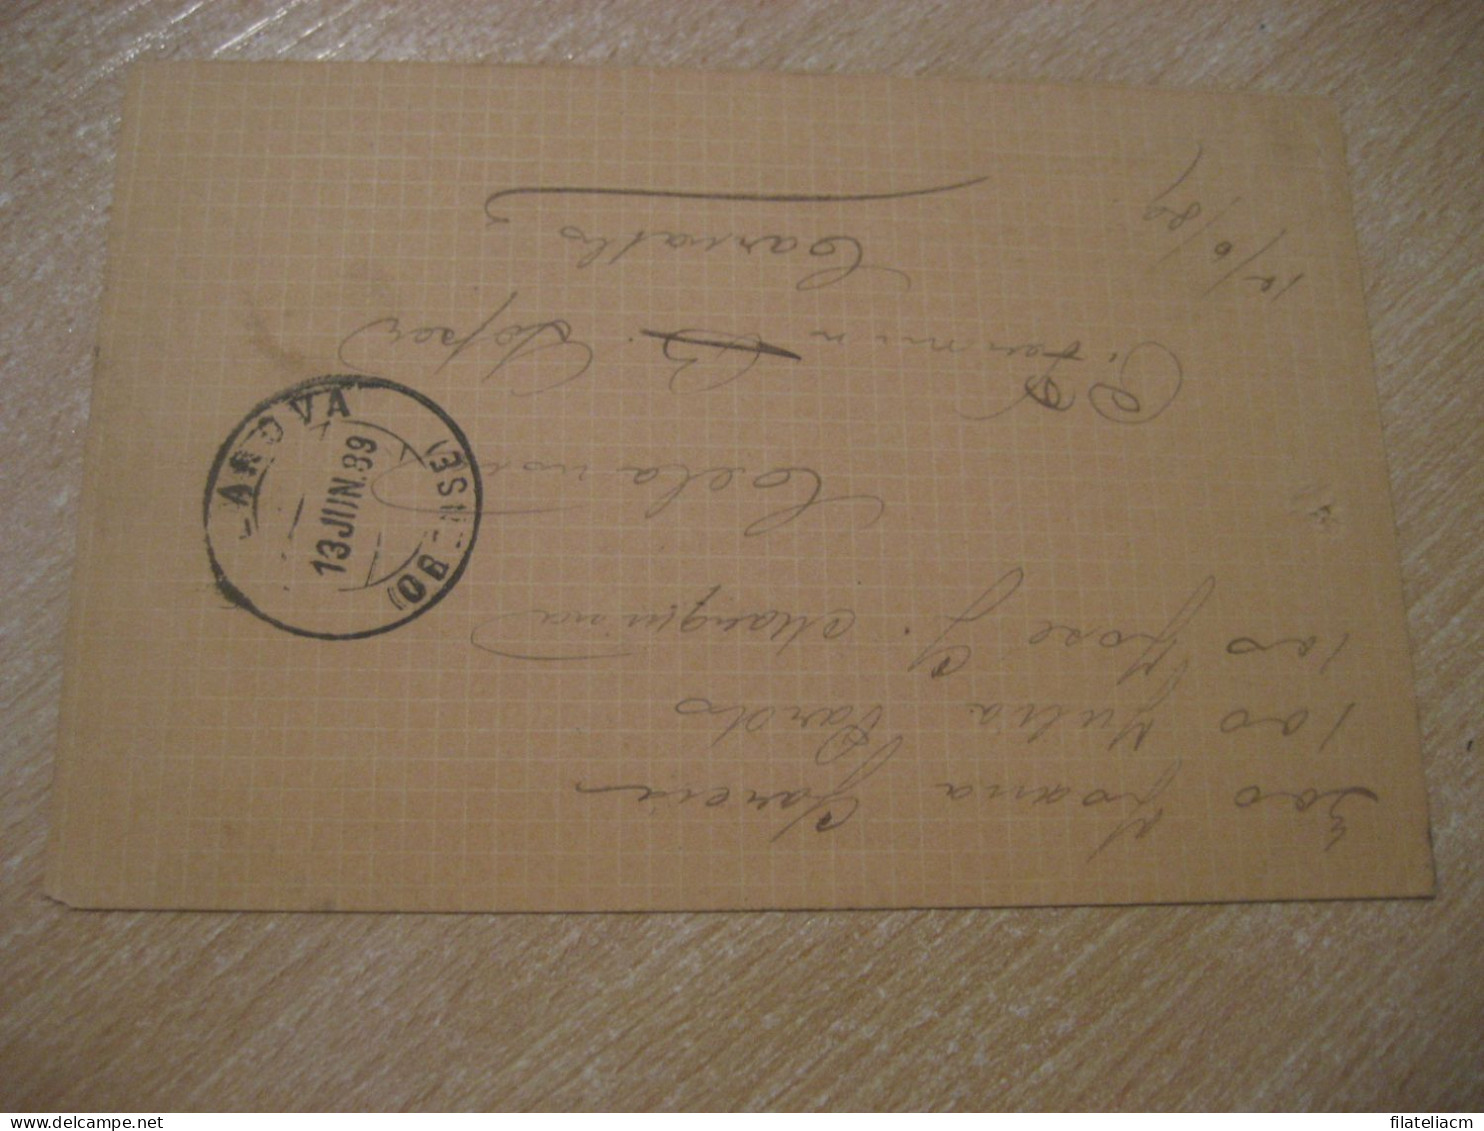 LISBOA 1889 To Celanova Orense Spain Cancel Bilhete Postal Stationery Card PORTUGAL Galicia - Covers & Documents